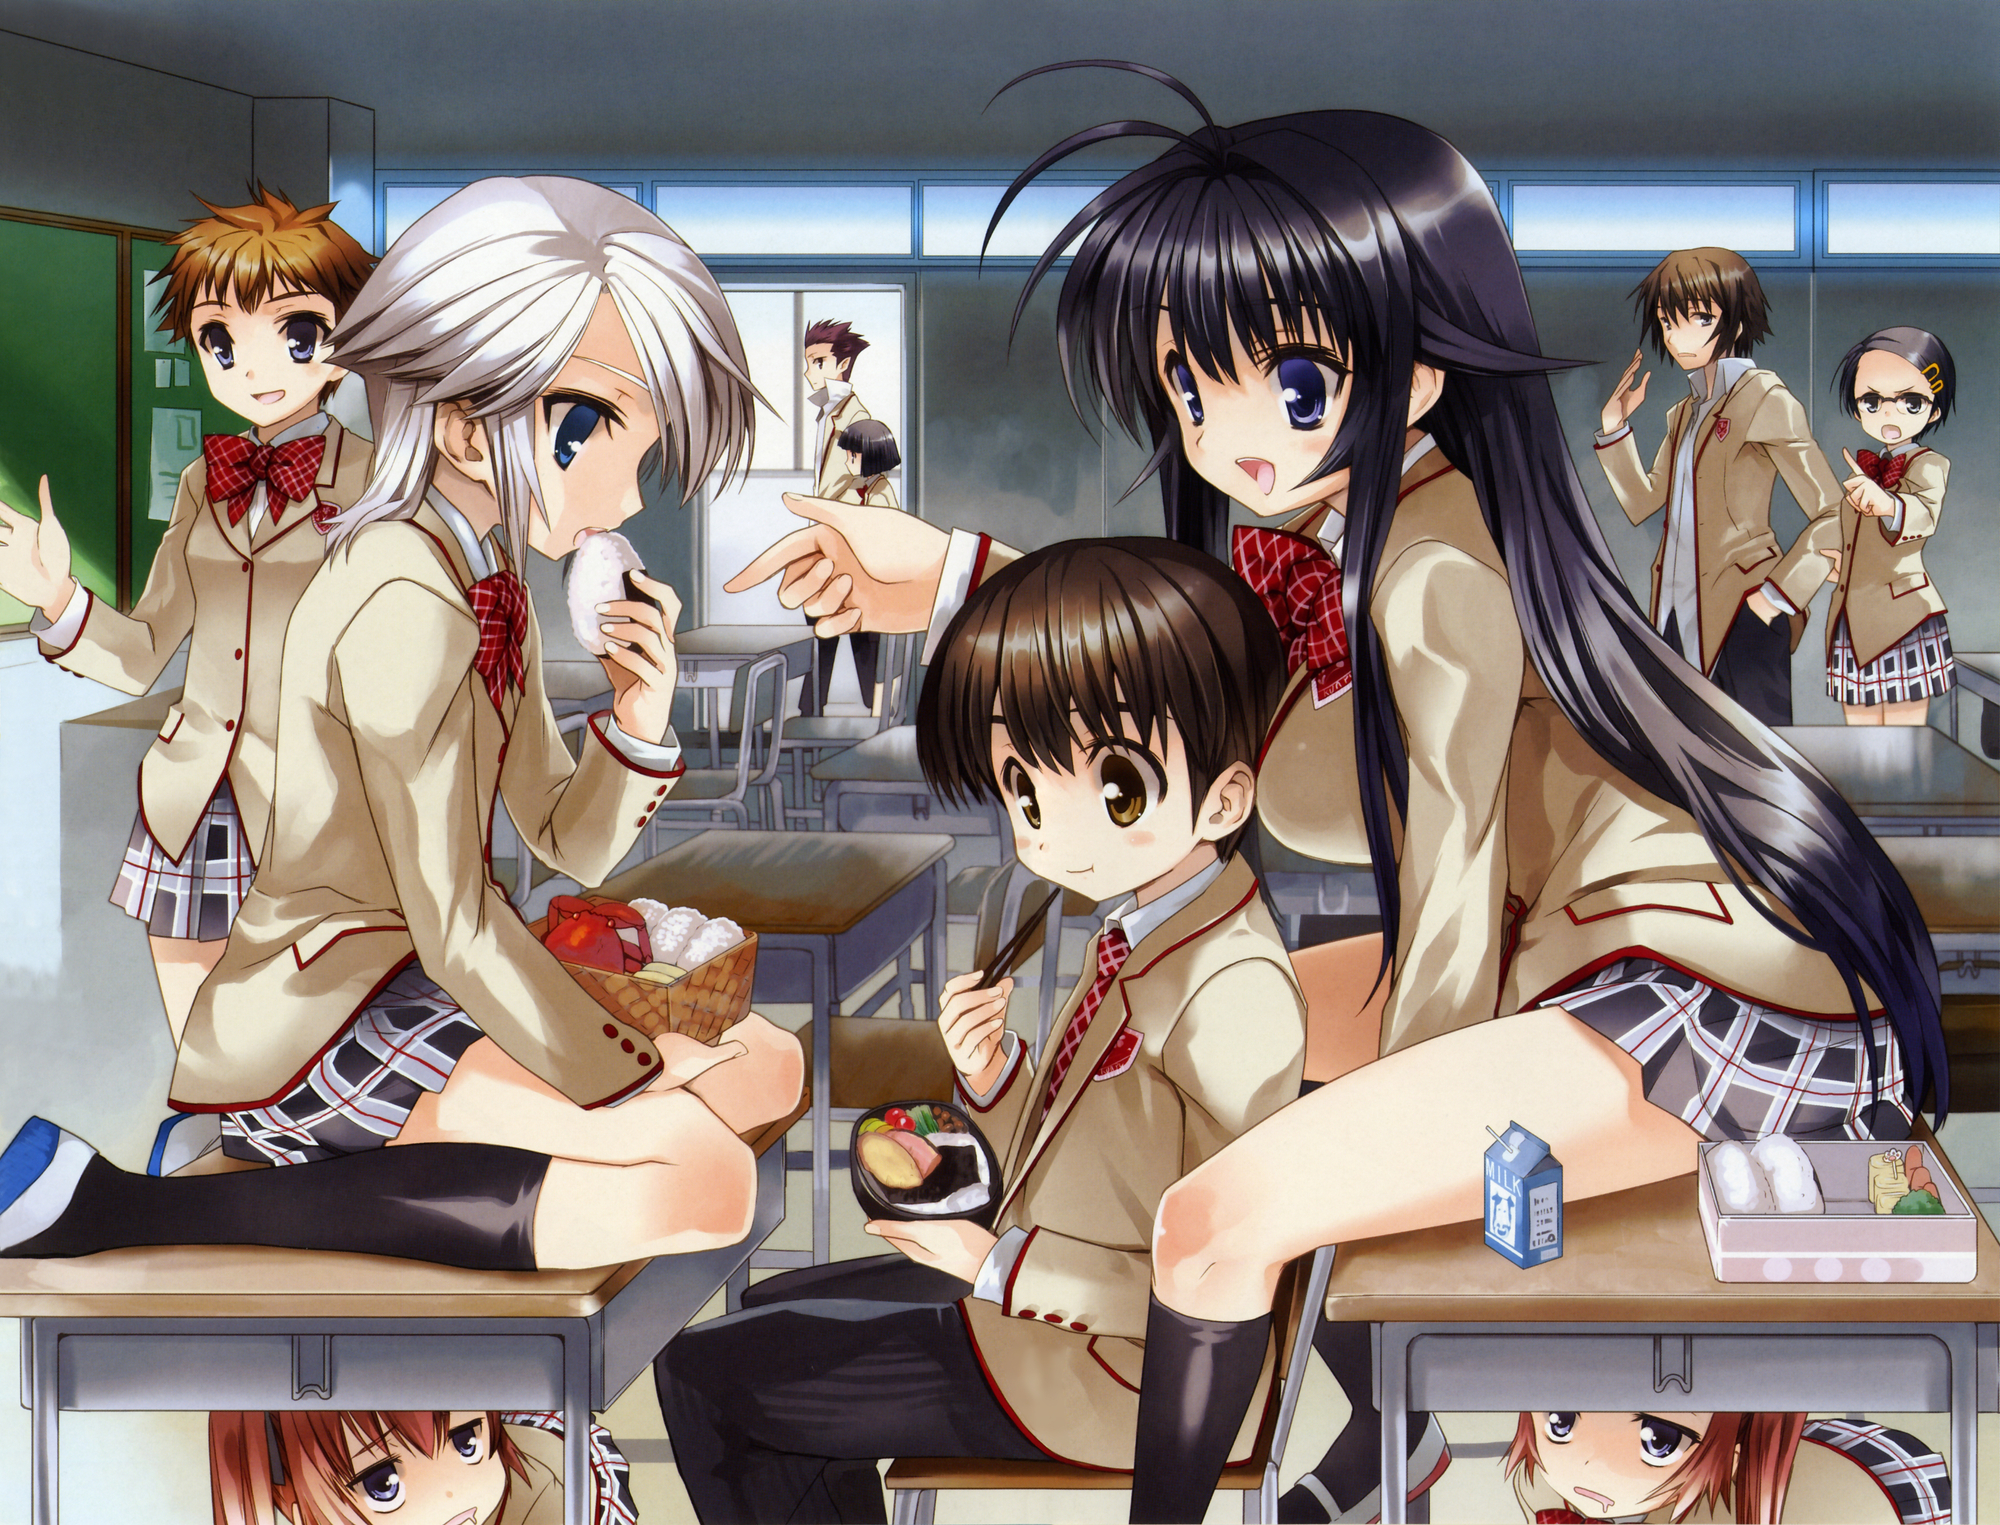 Anime desktop wallpaper featuring an idyllic scene titled School Days with characters from Kanokon.